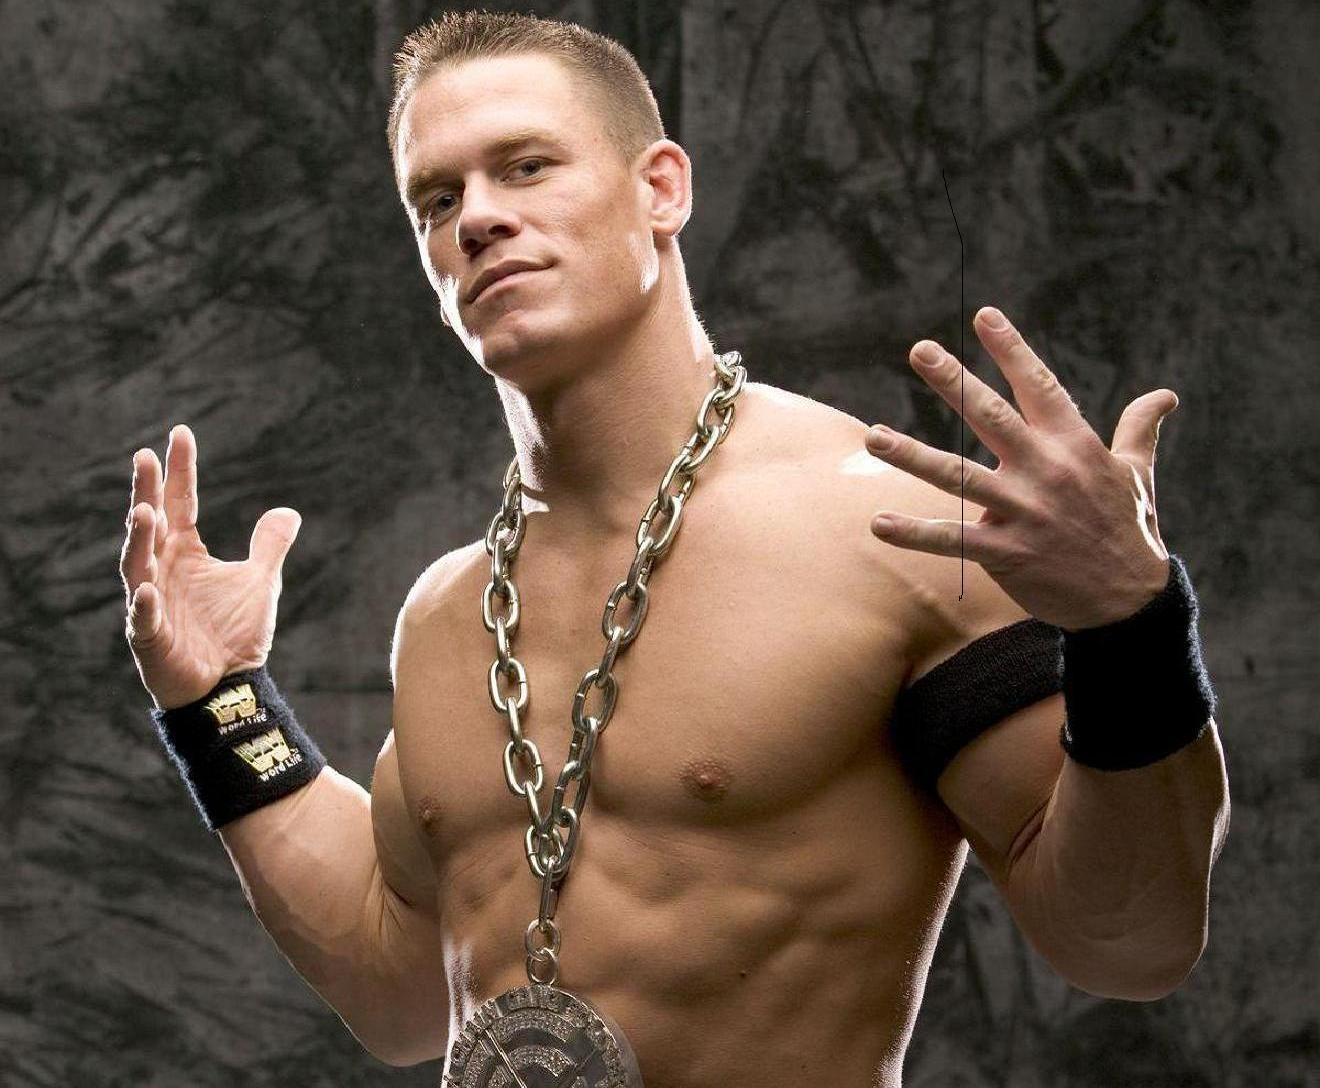 1080p Wallpapers: WWE Super Star John Cena Wallpapers